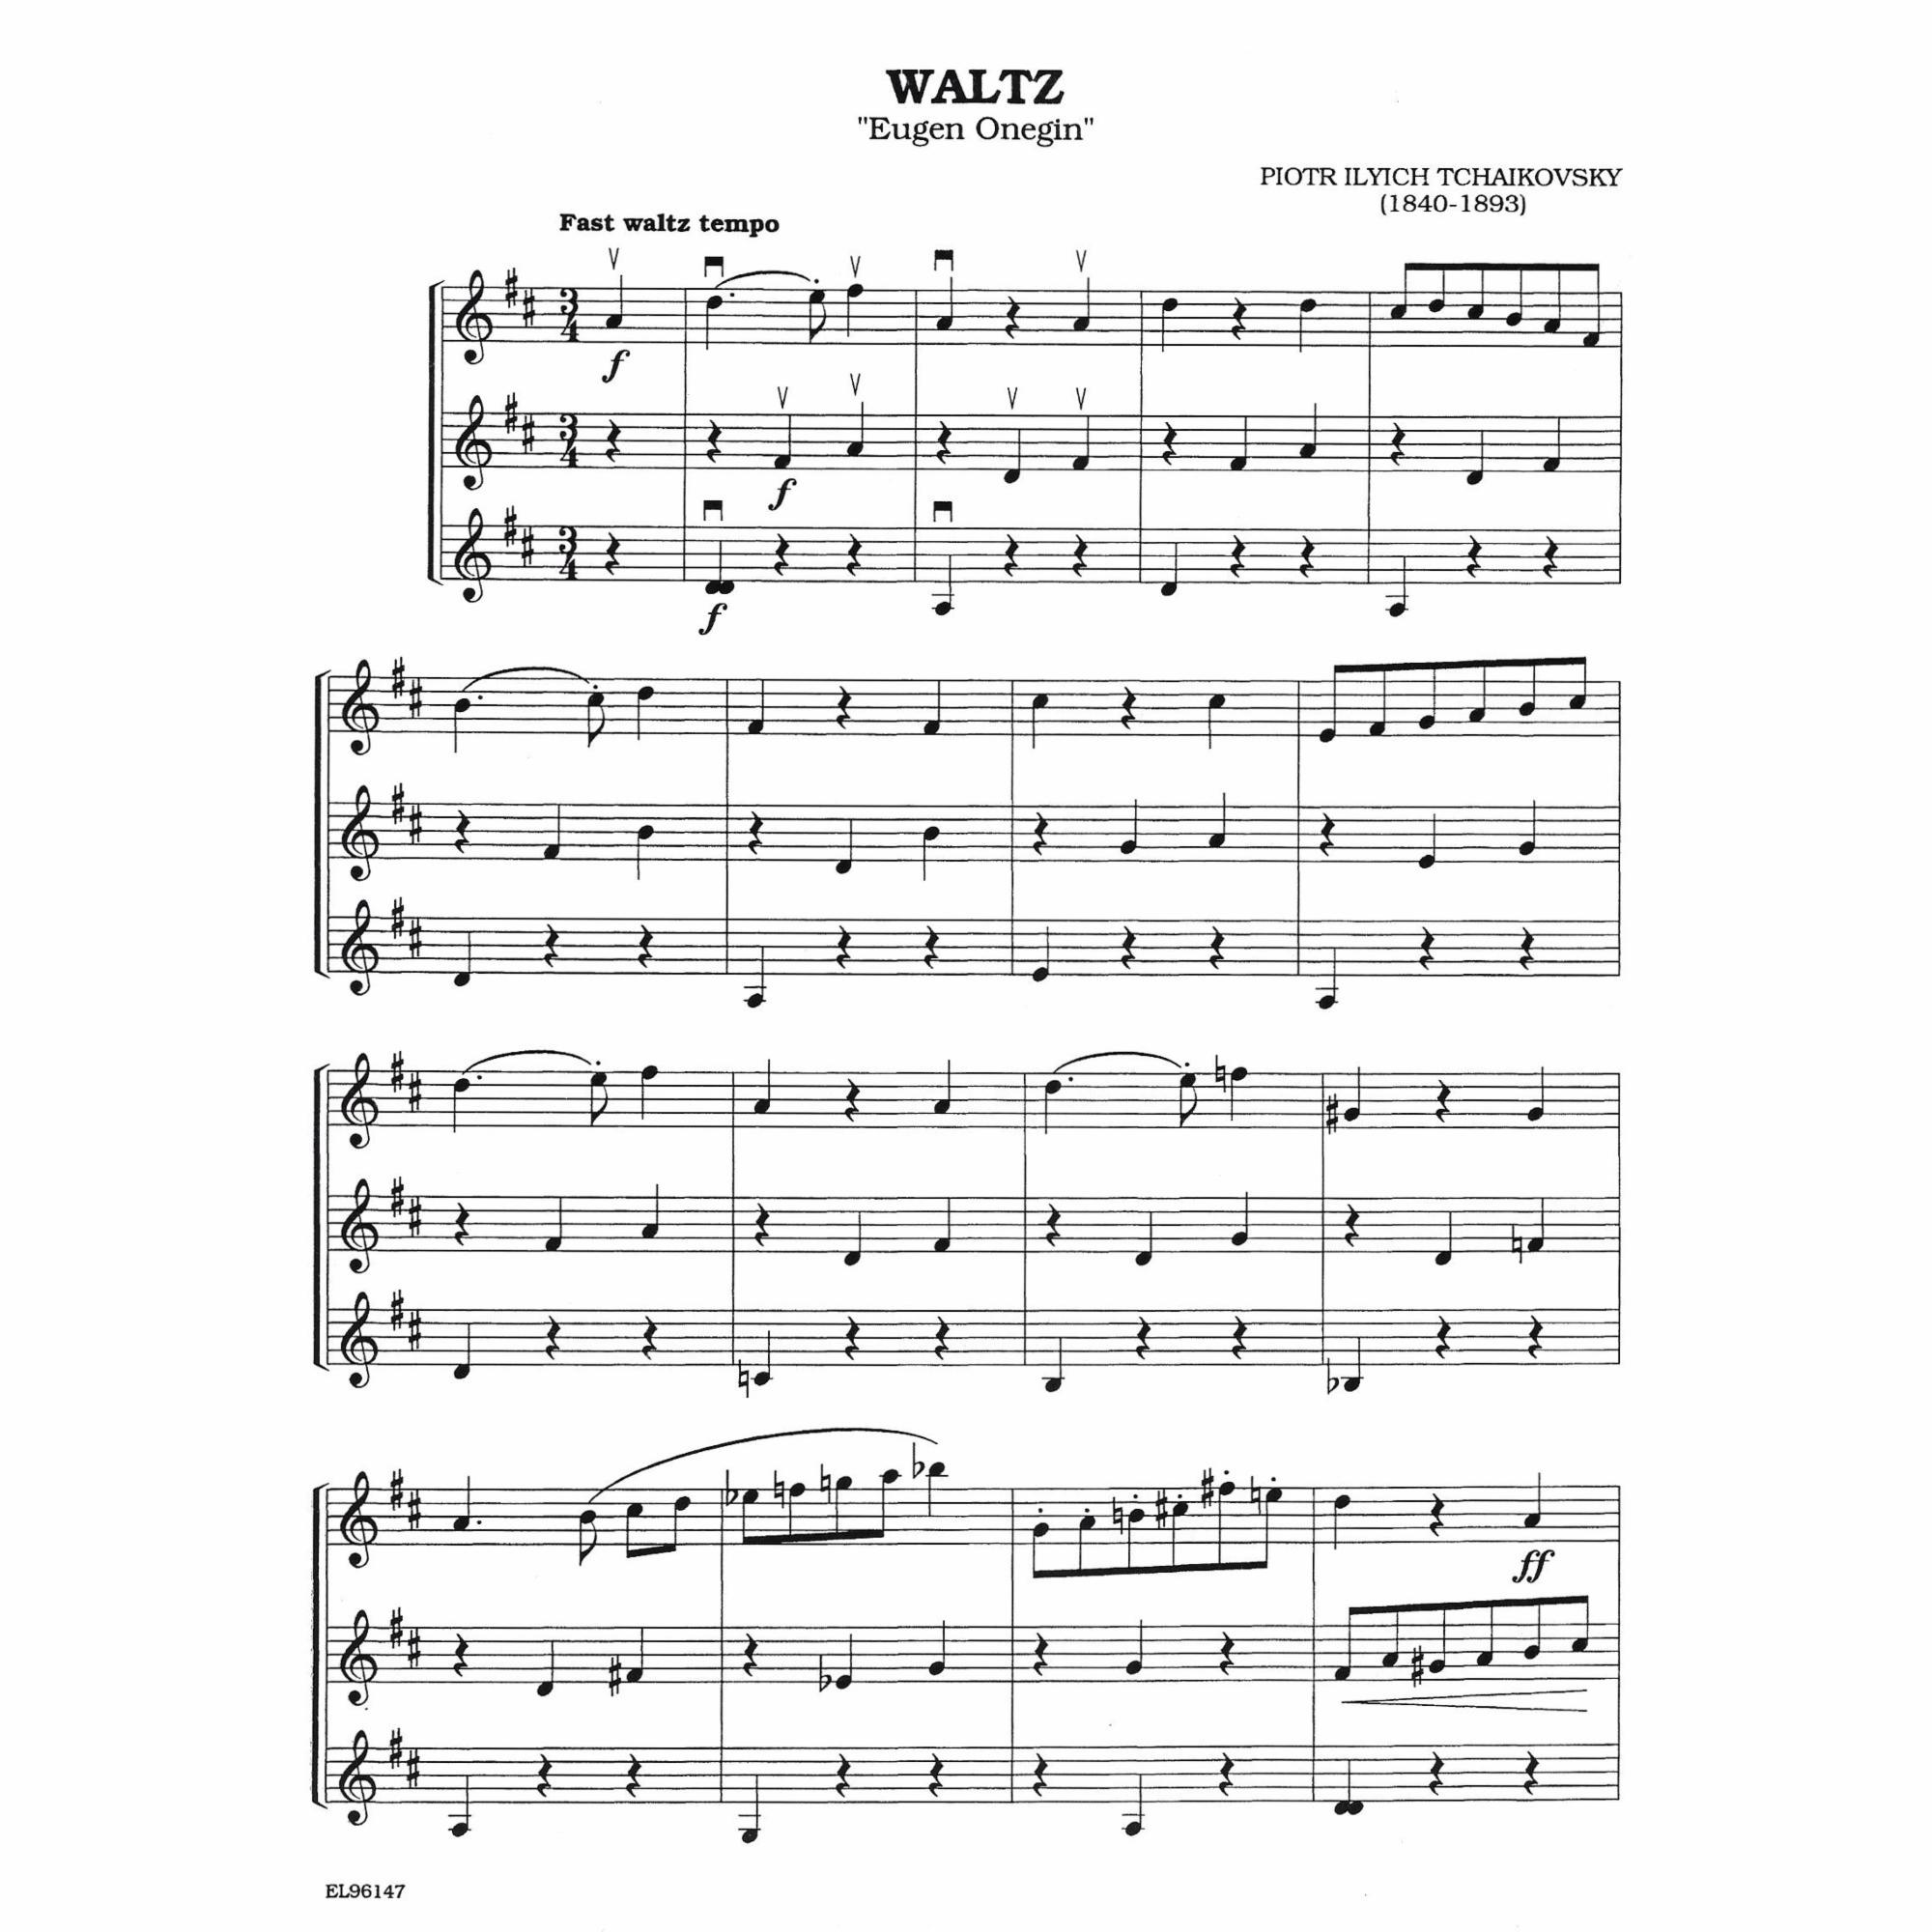 Sample: Three Violins (Pg. 16)